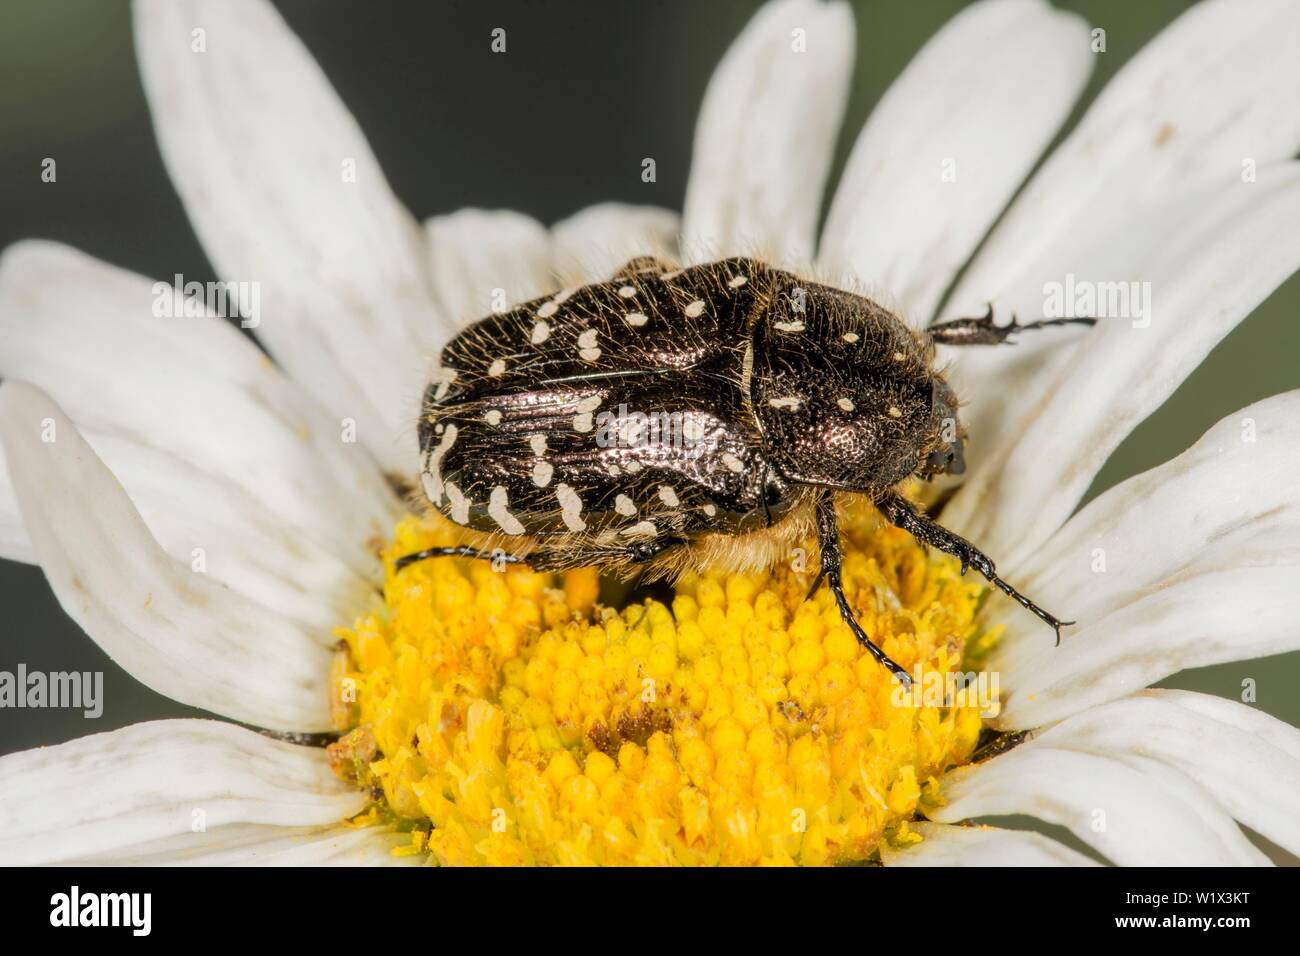 Shaggy flower beetle (Tropinota hirta) mangia il polline dei fiori di una margherita (Leucanthemum massimo), Baden-Württemberg, Germania Foto Stock